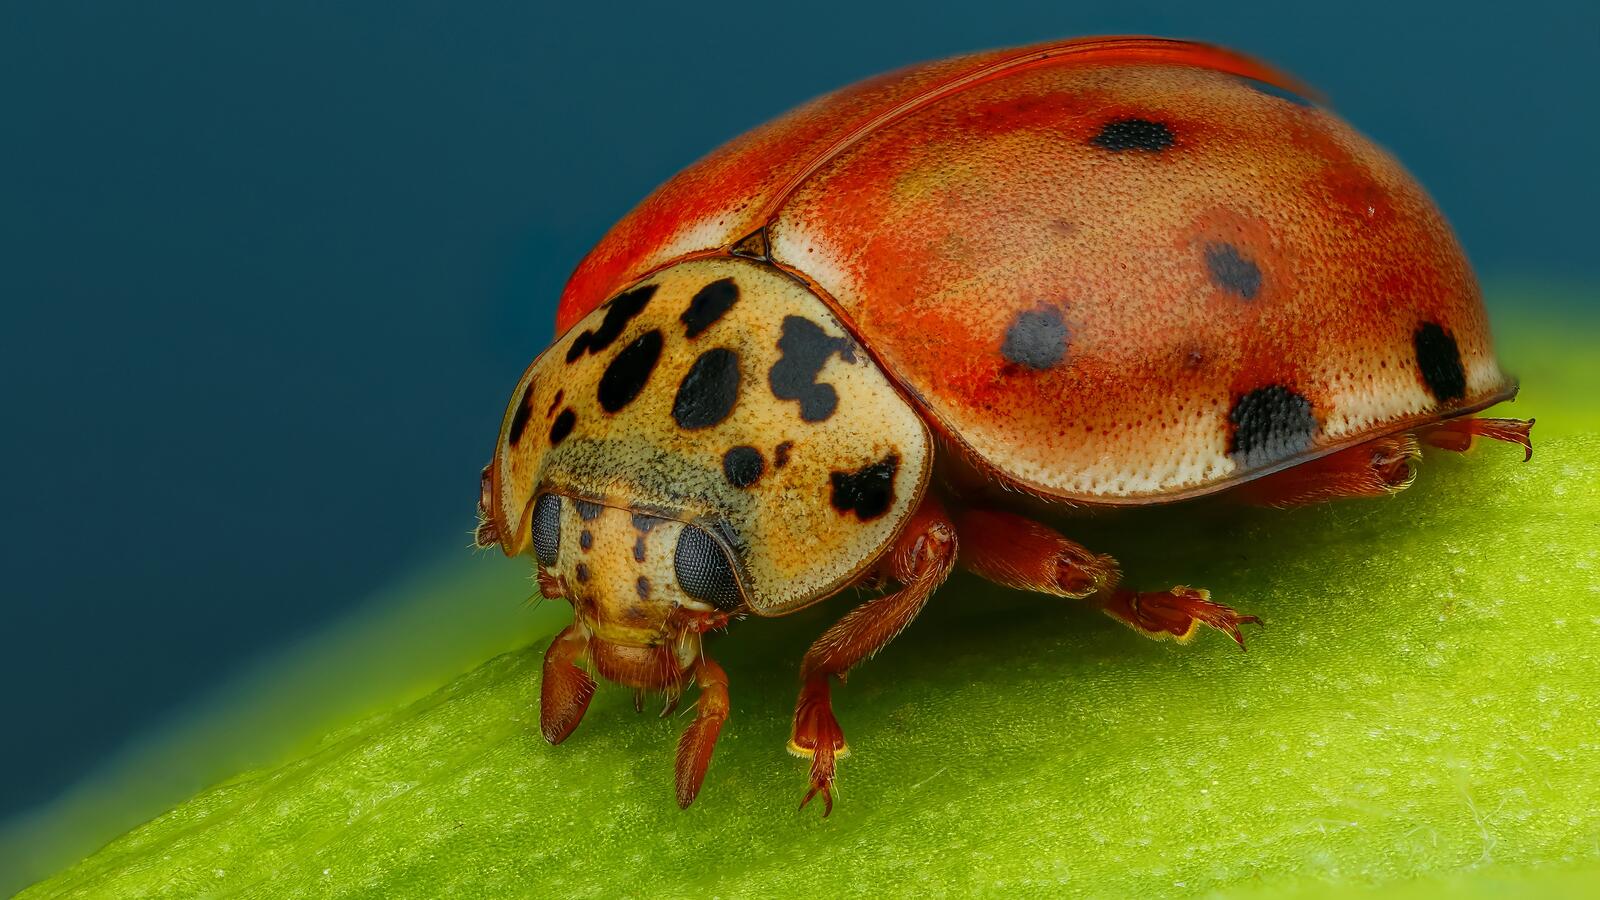 Free photo Close-up photo of a ladybug with black spots